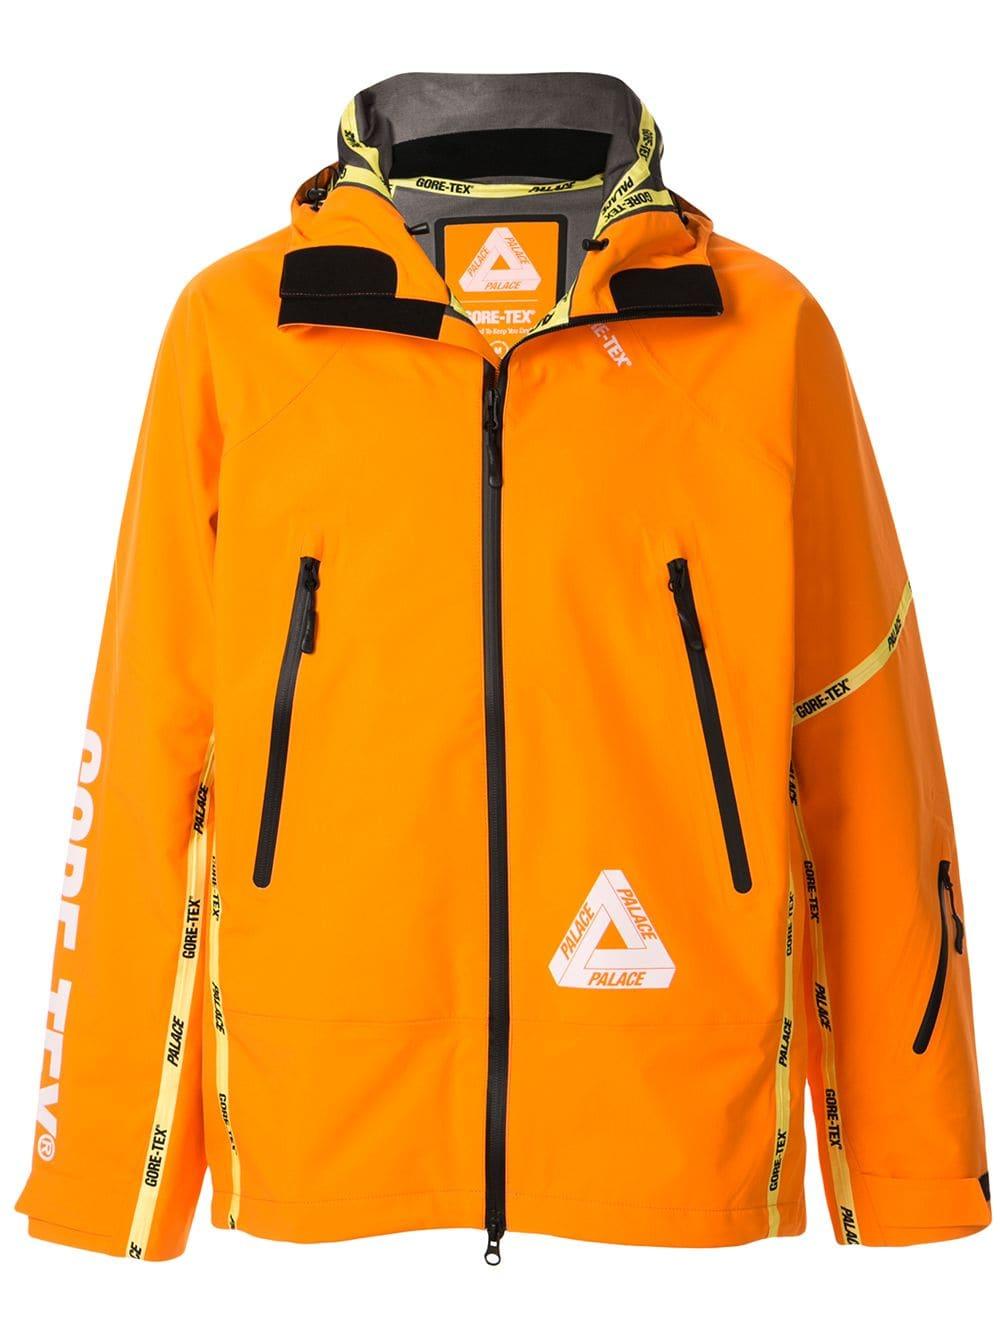 Palace Palex Gore-tex Jacket in Orange for Men - Lyst